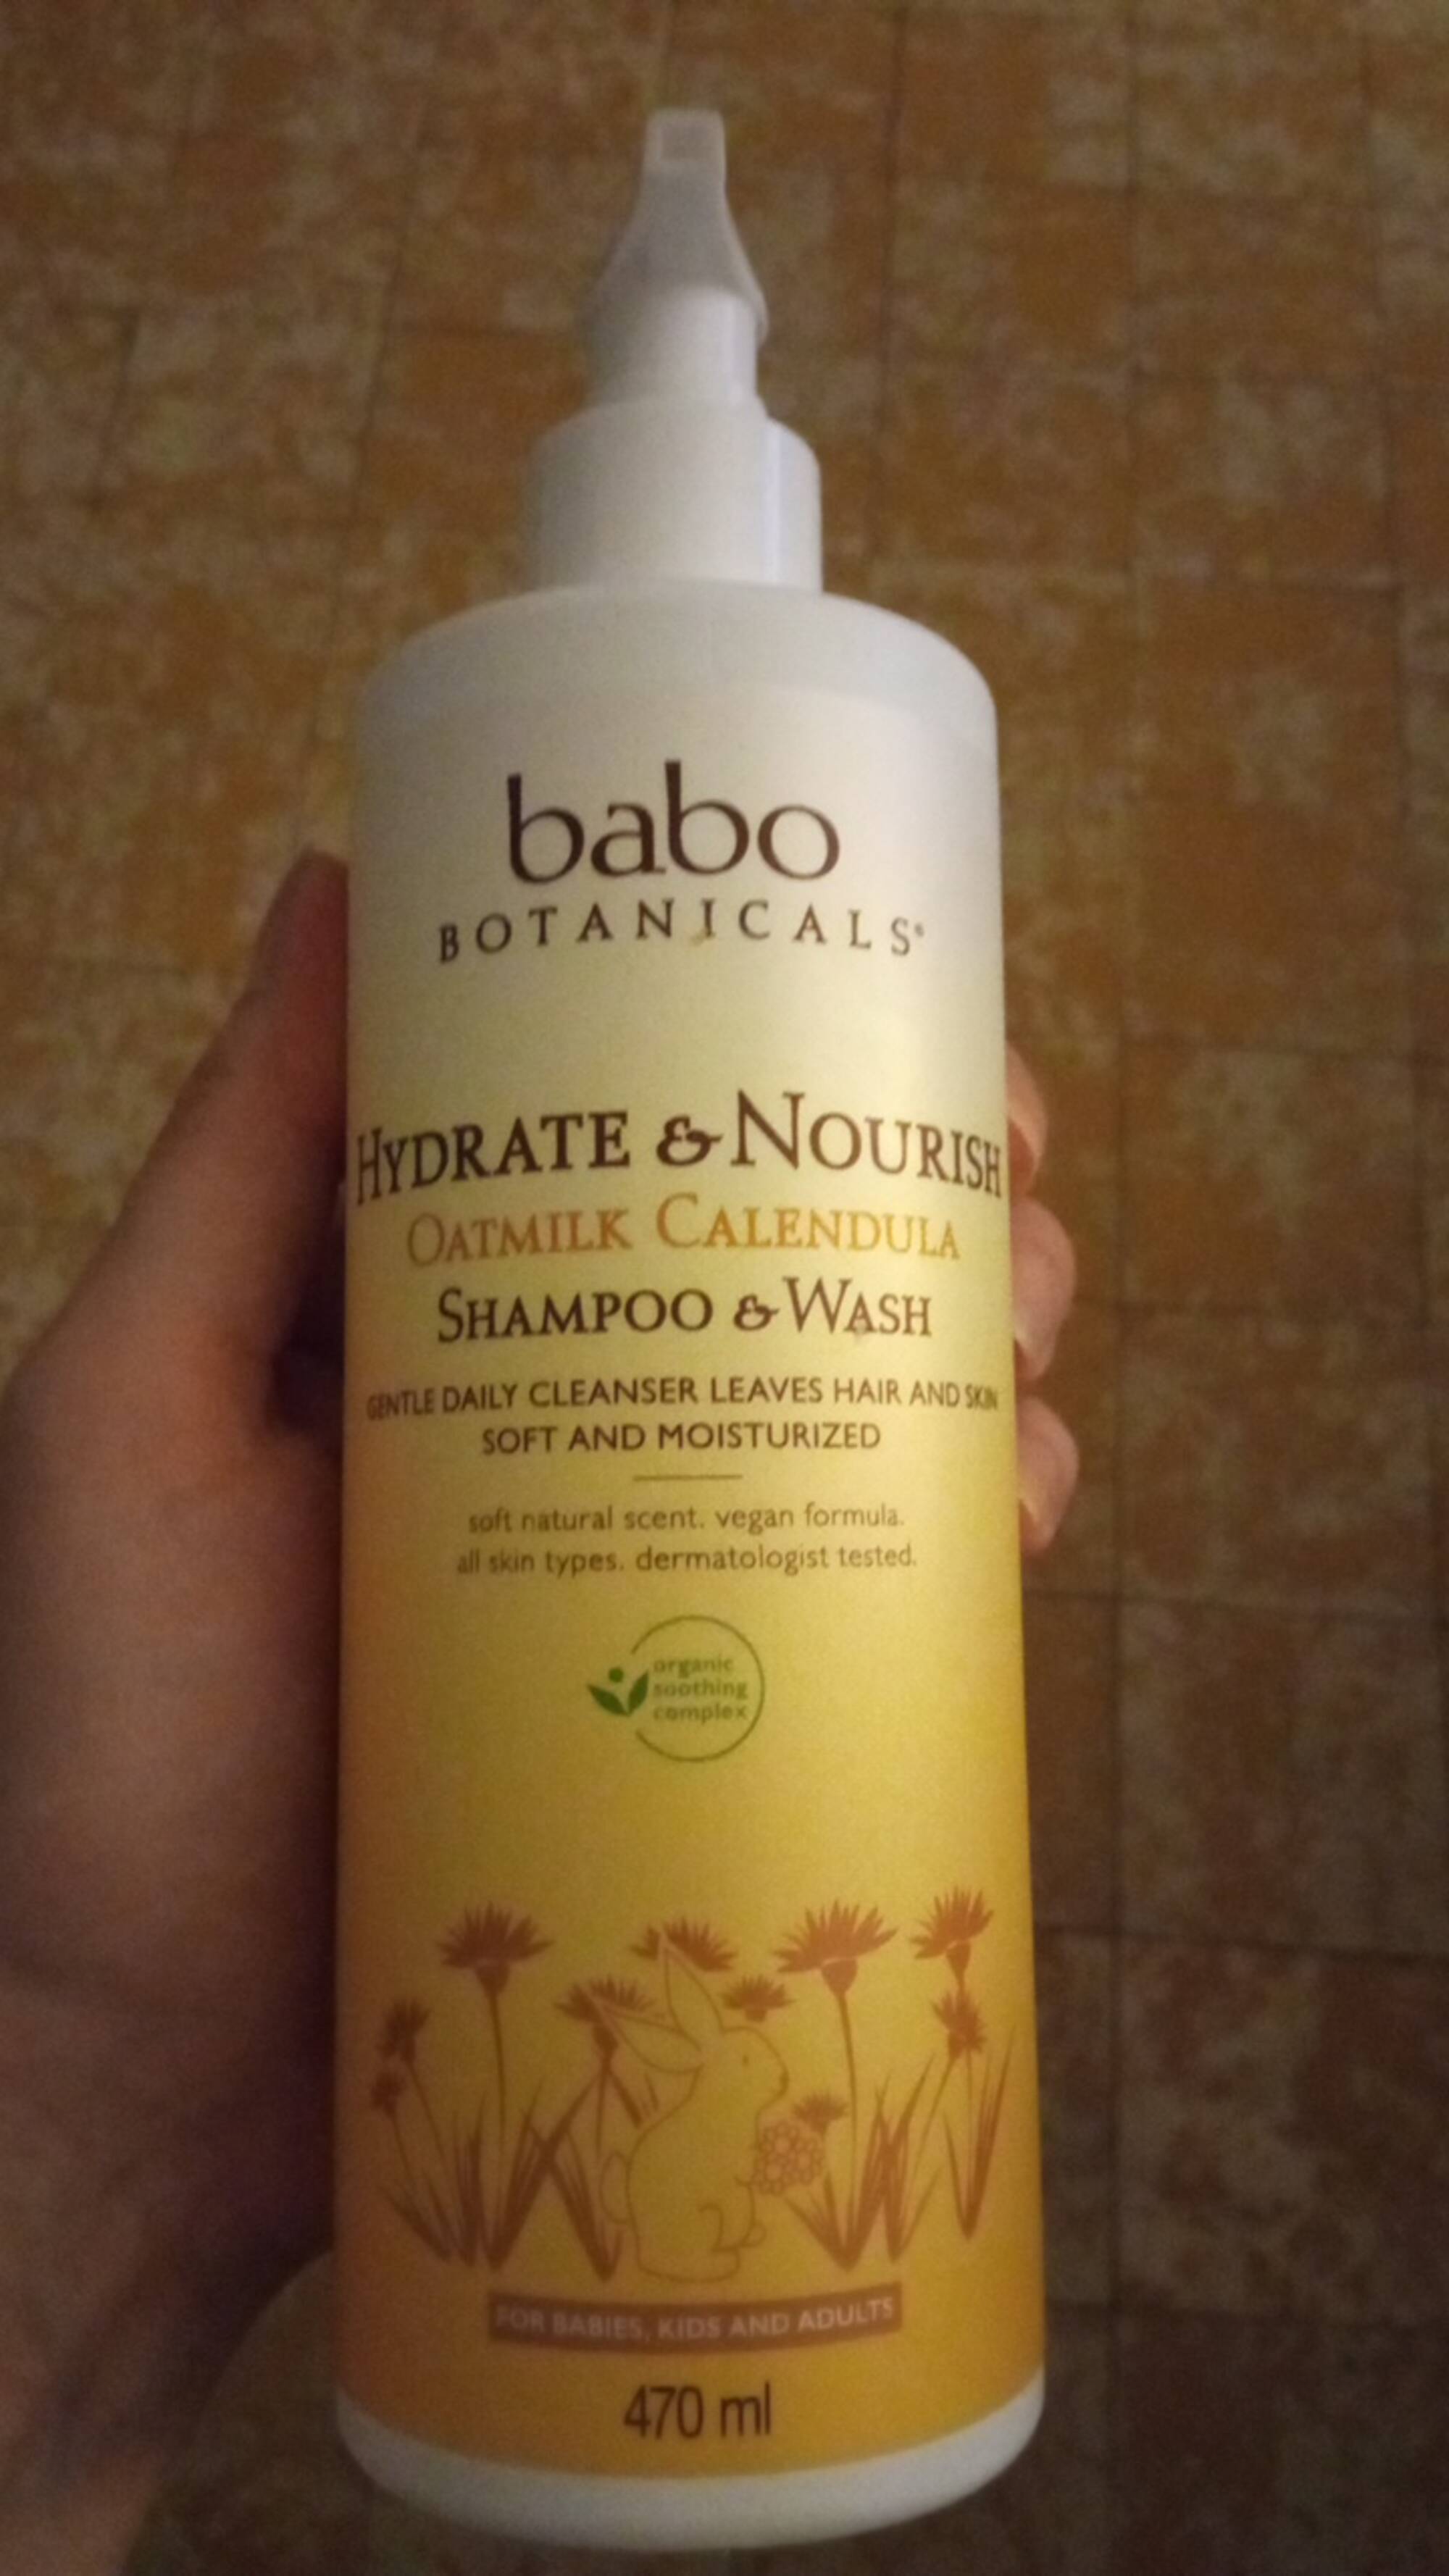 BABO BOTANICALS - Oatmilk calendula - Shampoo & wash